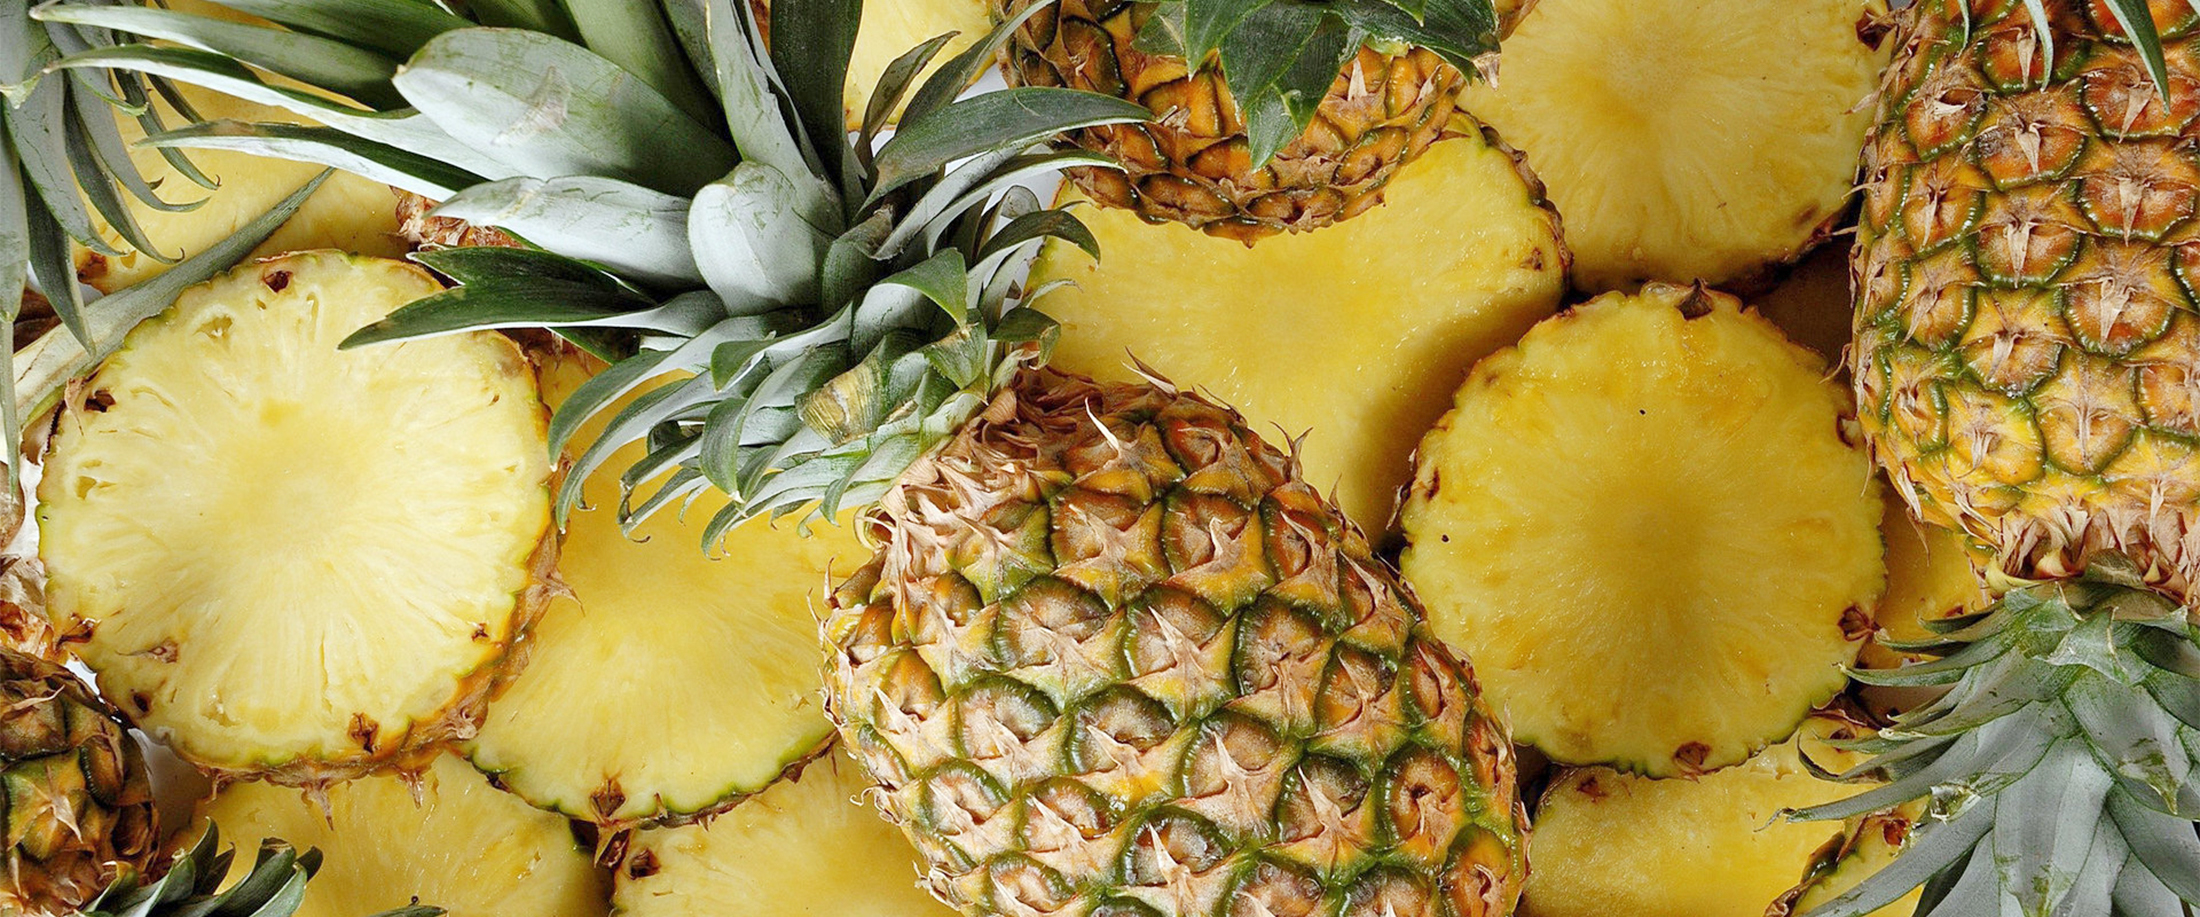 Pineapple Fruit Products - Manufacturer & Supplier | LemonConcentrate